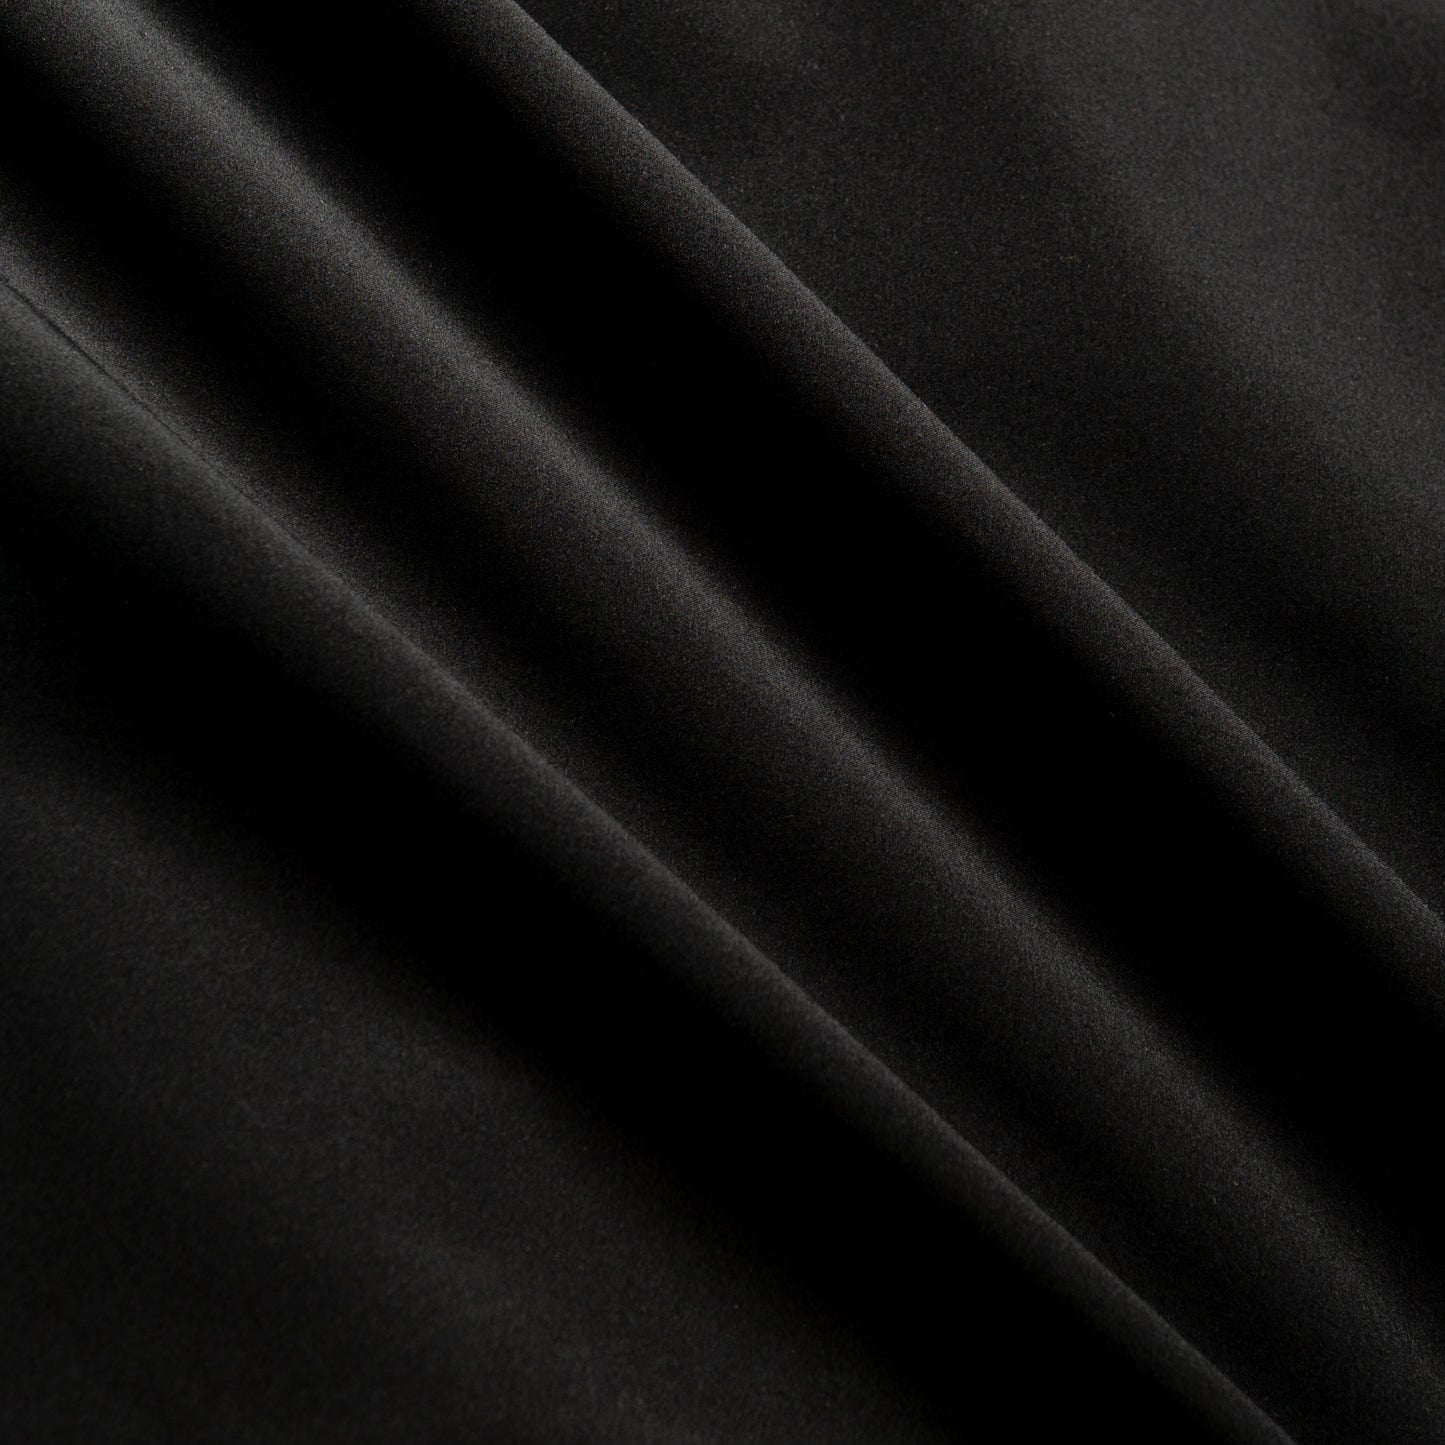 Triton Soft Shell Jacket (Black)